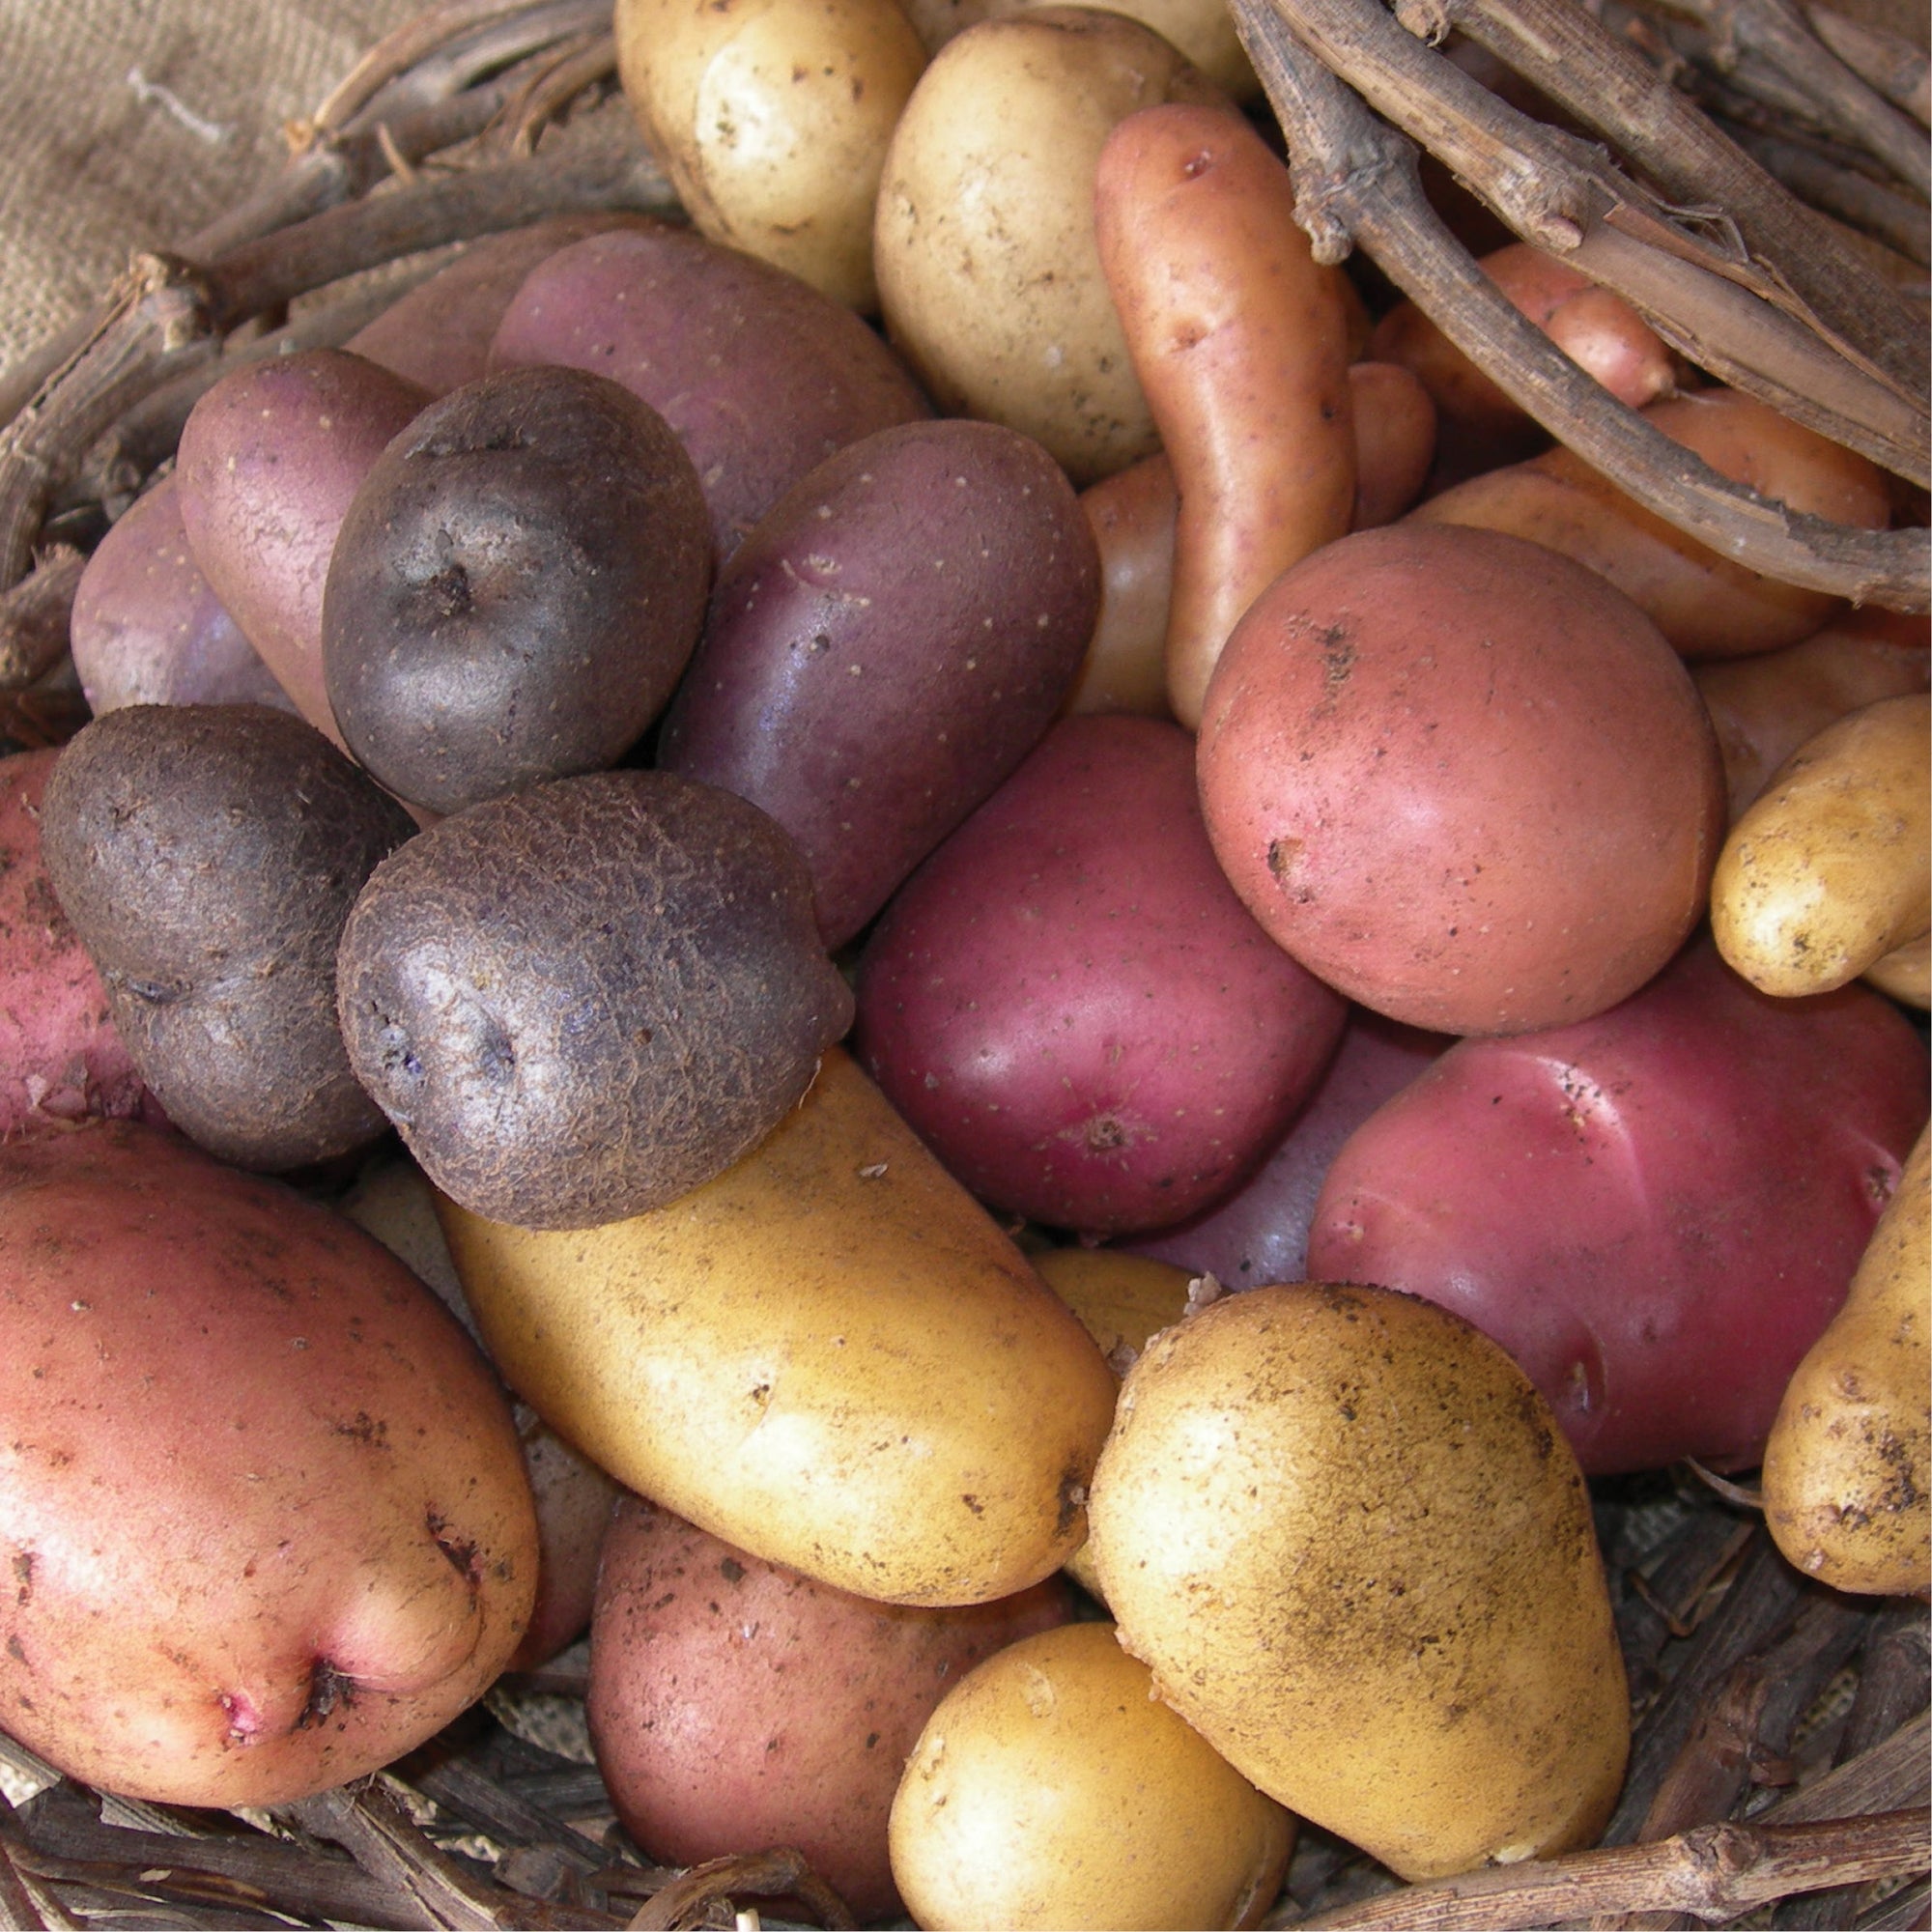 Potato - Lucky Dip Selection - Members save over 40%